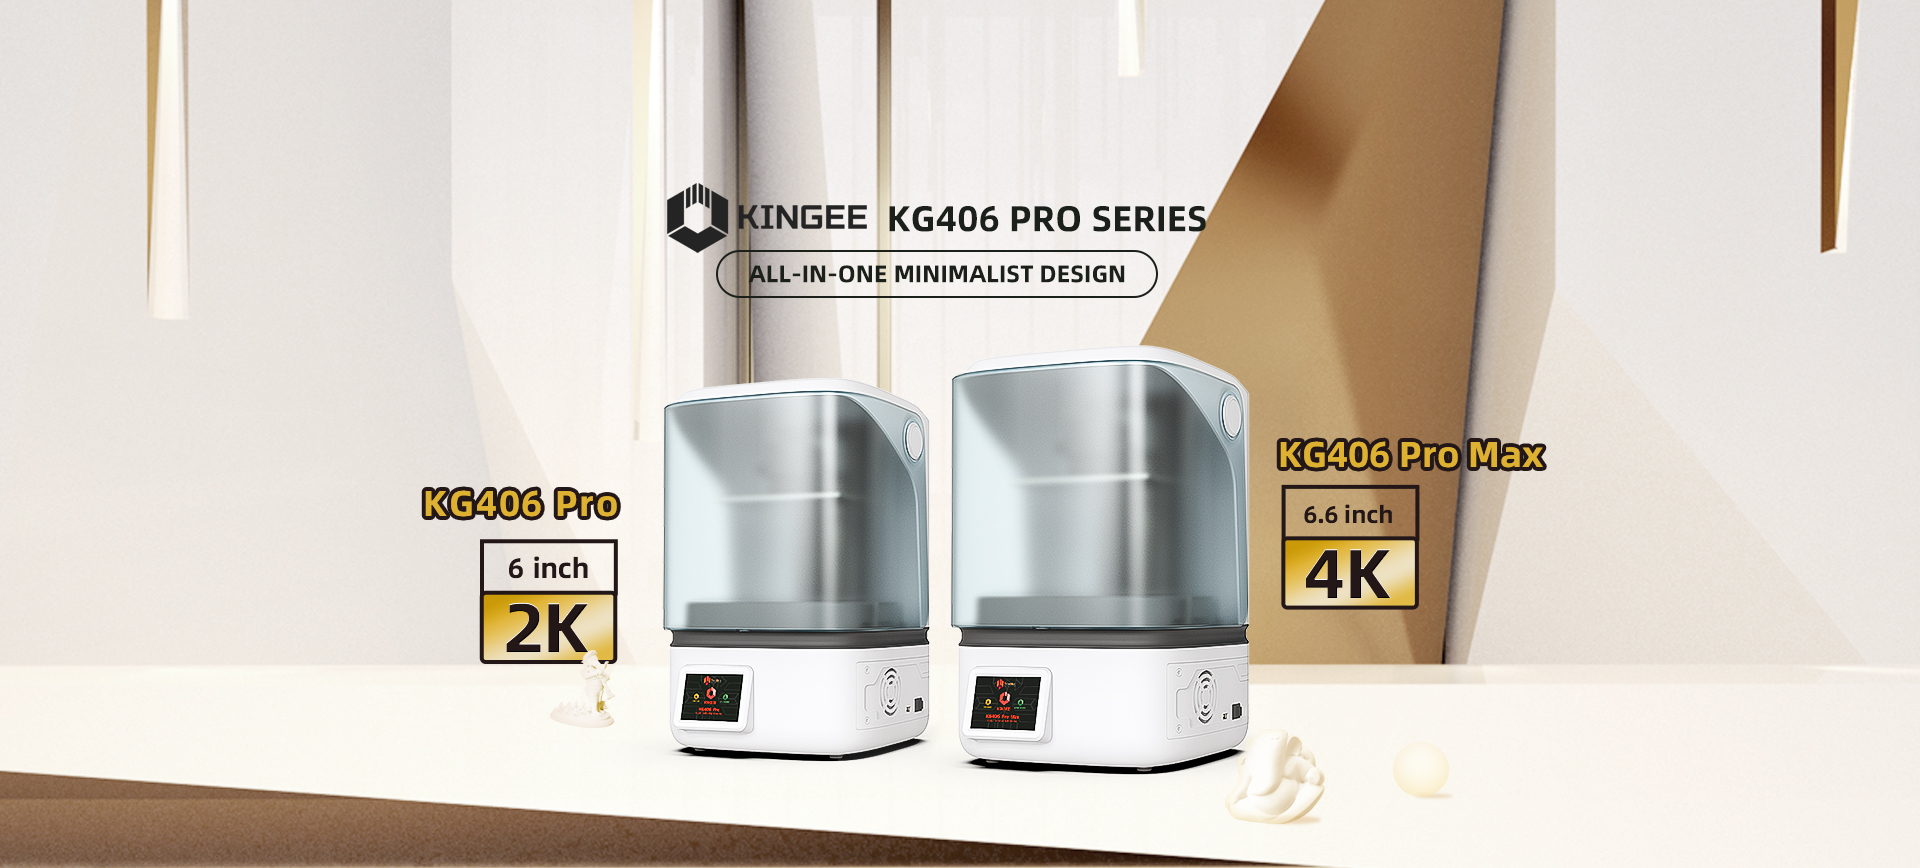 KG406 Pro series